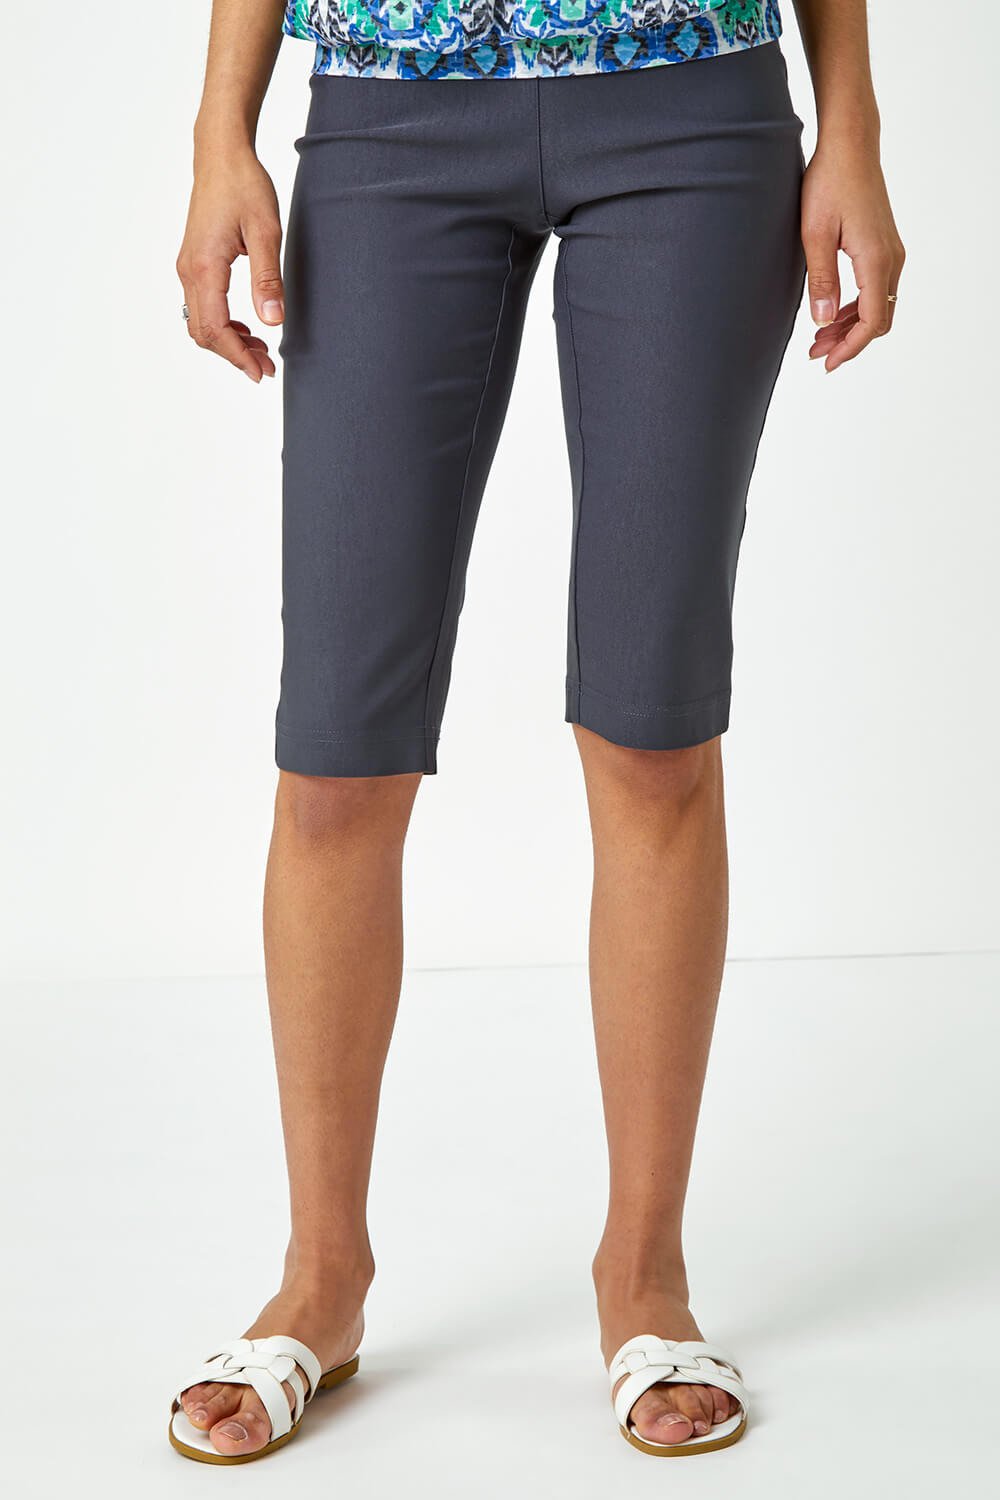 Dark Grey Knee Length Stretch Shorts, Image 4 of 5